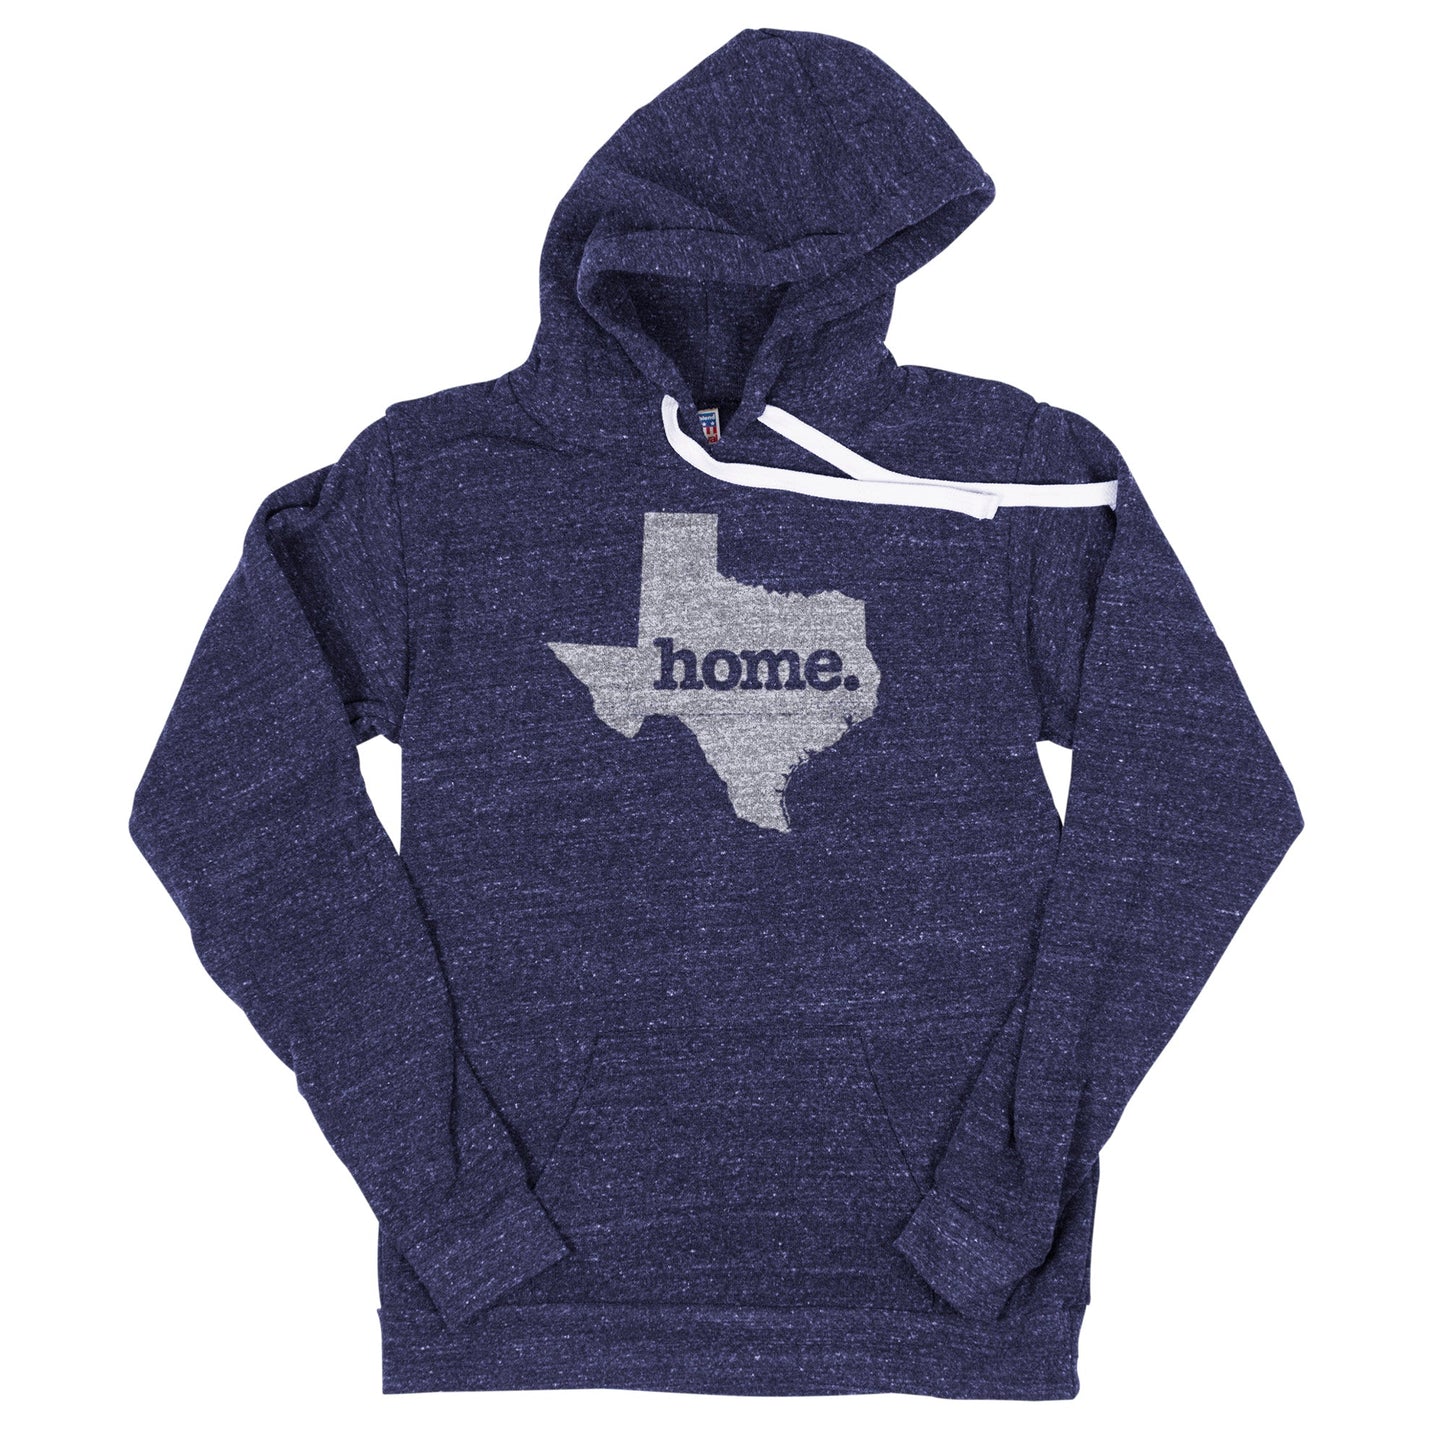 home. Men's Unisex Hoodie - Texas